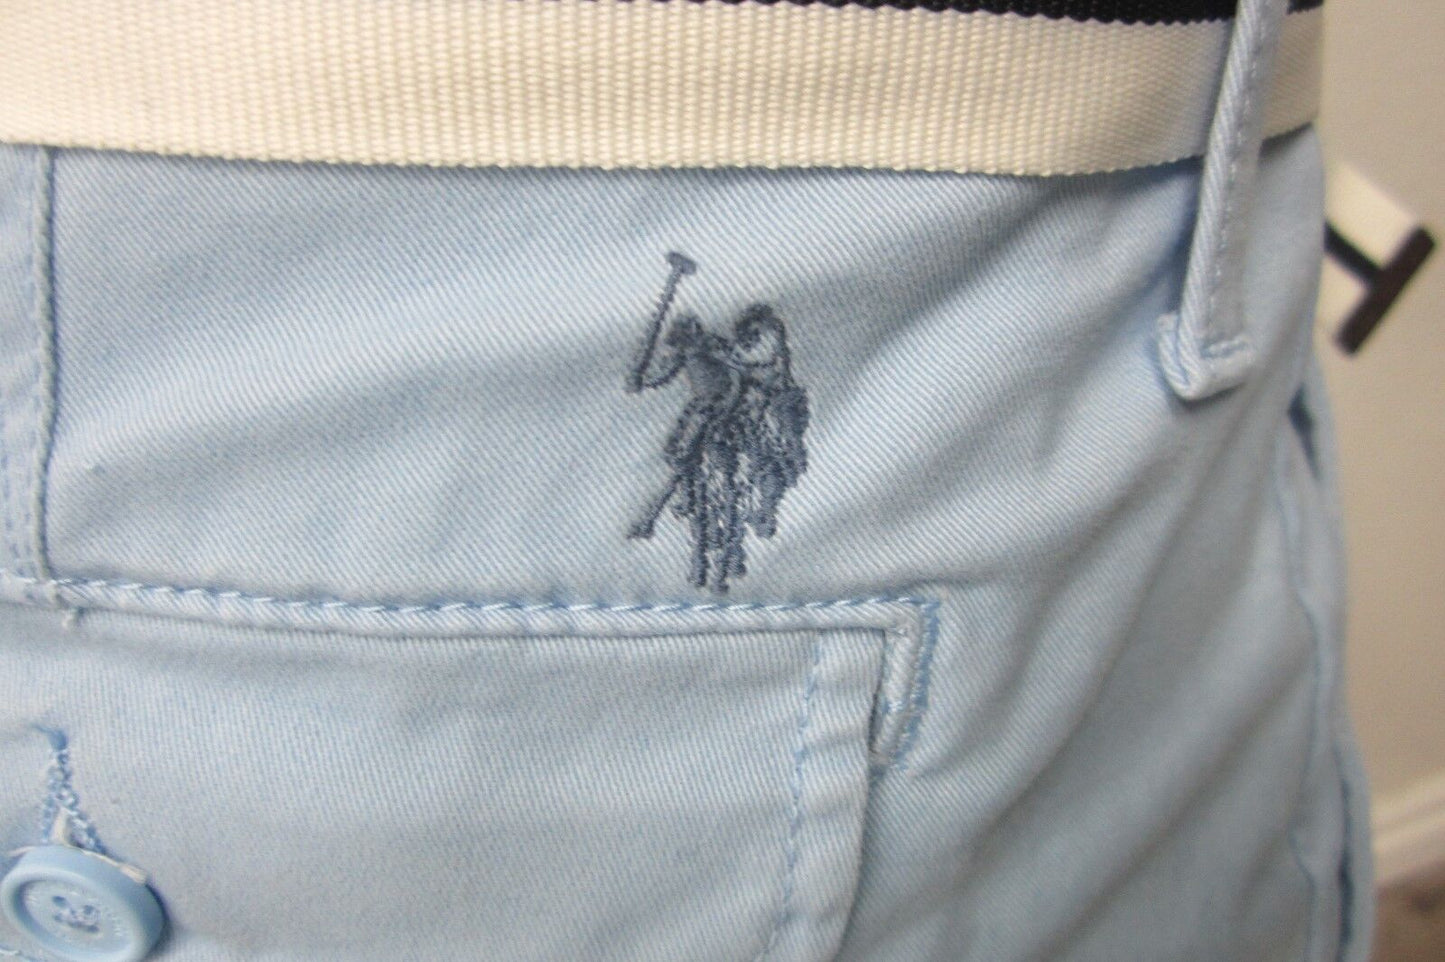 *NWT* U.S. Polo Assn. Men's Flat Front Chambray Shorts w/ Belt Blue Size 36